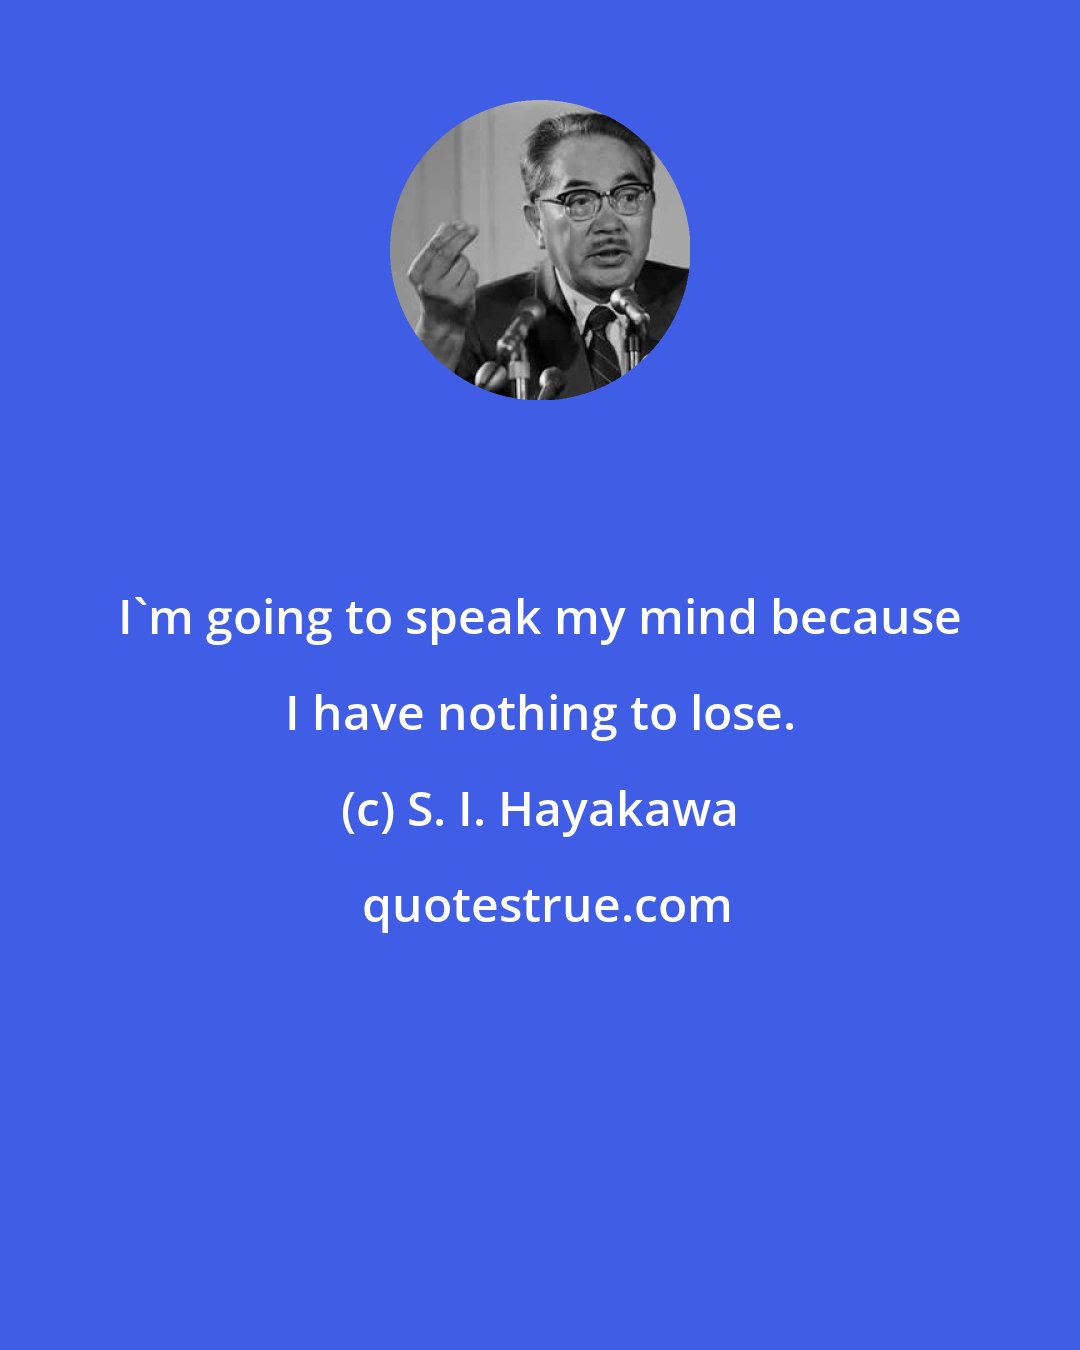 S. I. Hayakawa: I'm going to speak my mind because I have nothing to lose.